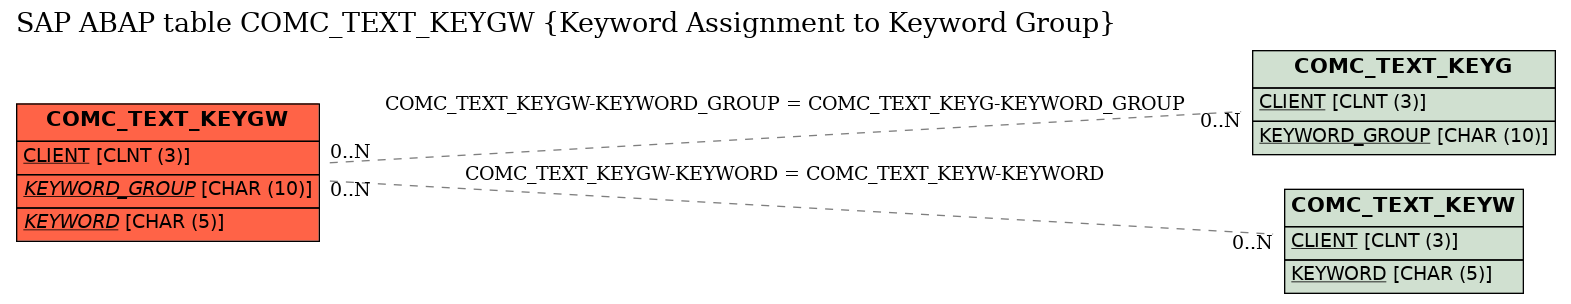 E-R Diagram for table COMC_TEXT_KEYGW (Keyword Assignment to Keyword Group)